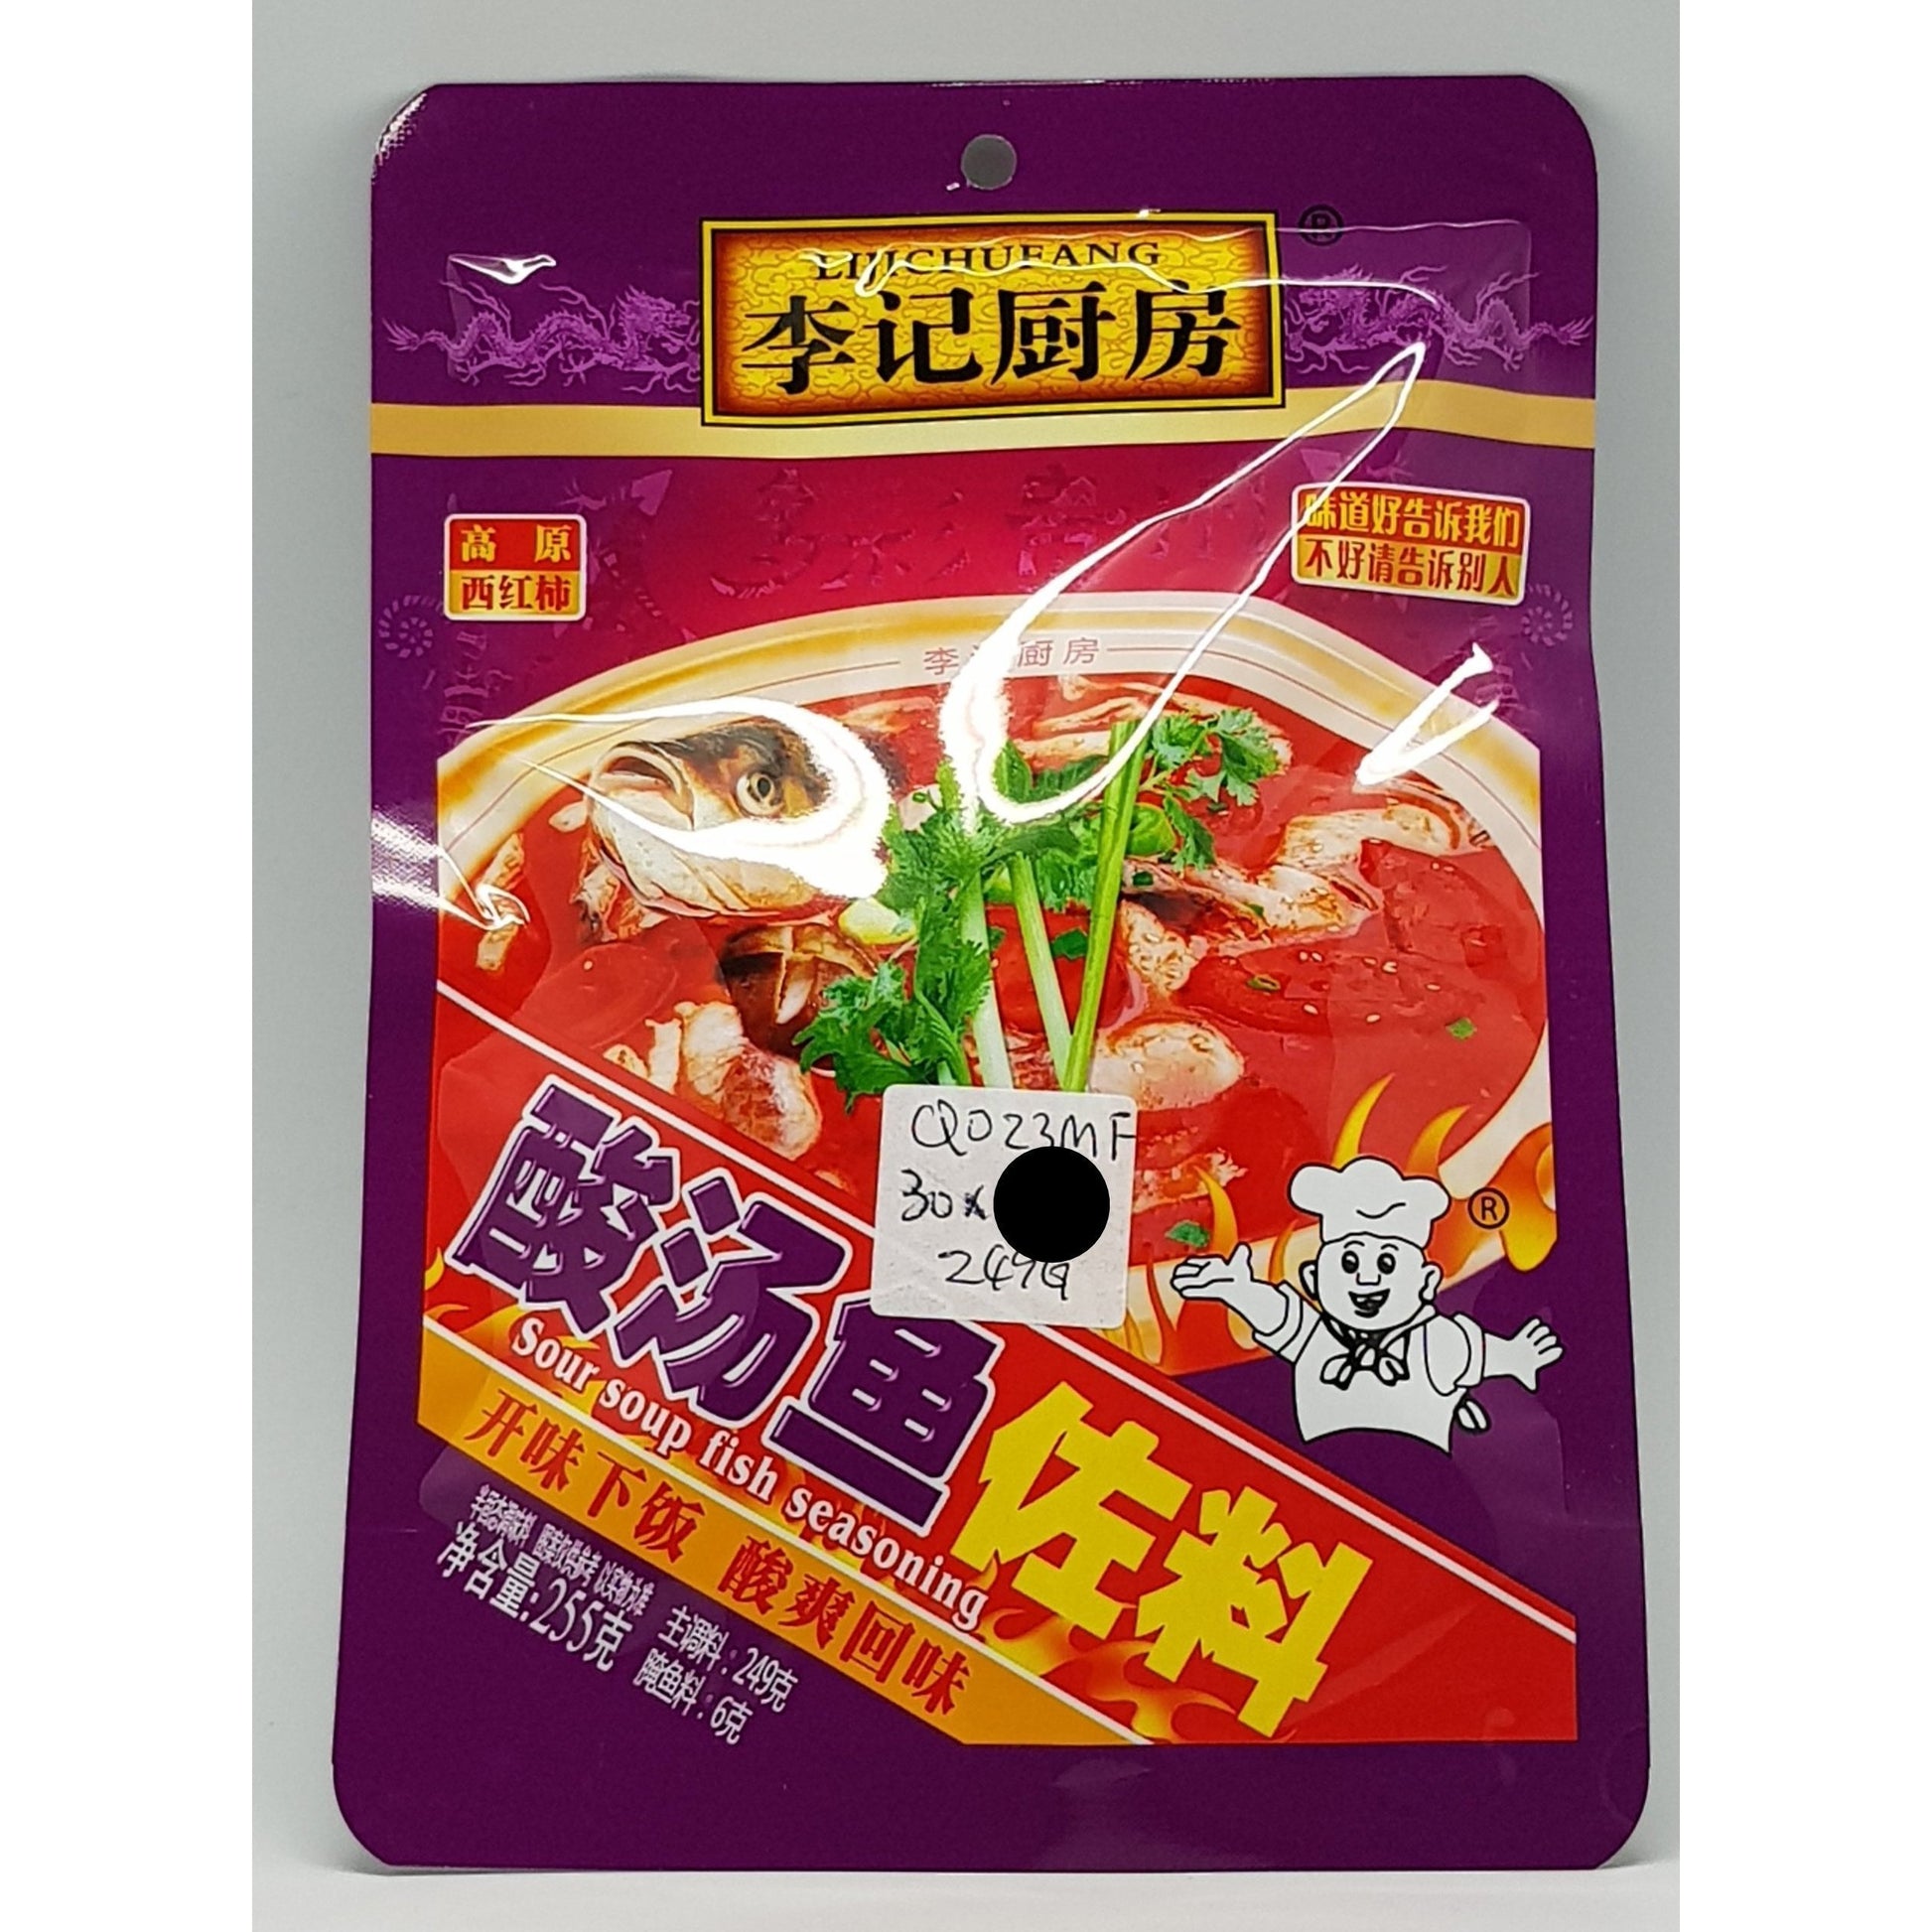 Q023MF Li Ji Chu Fang Brand - Sour Soup Base For Fish 255g - 30 bags/CTN - New Eastland Pty Ltd - Asian food wholesalers